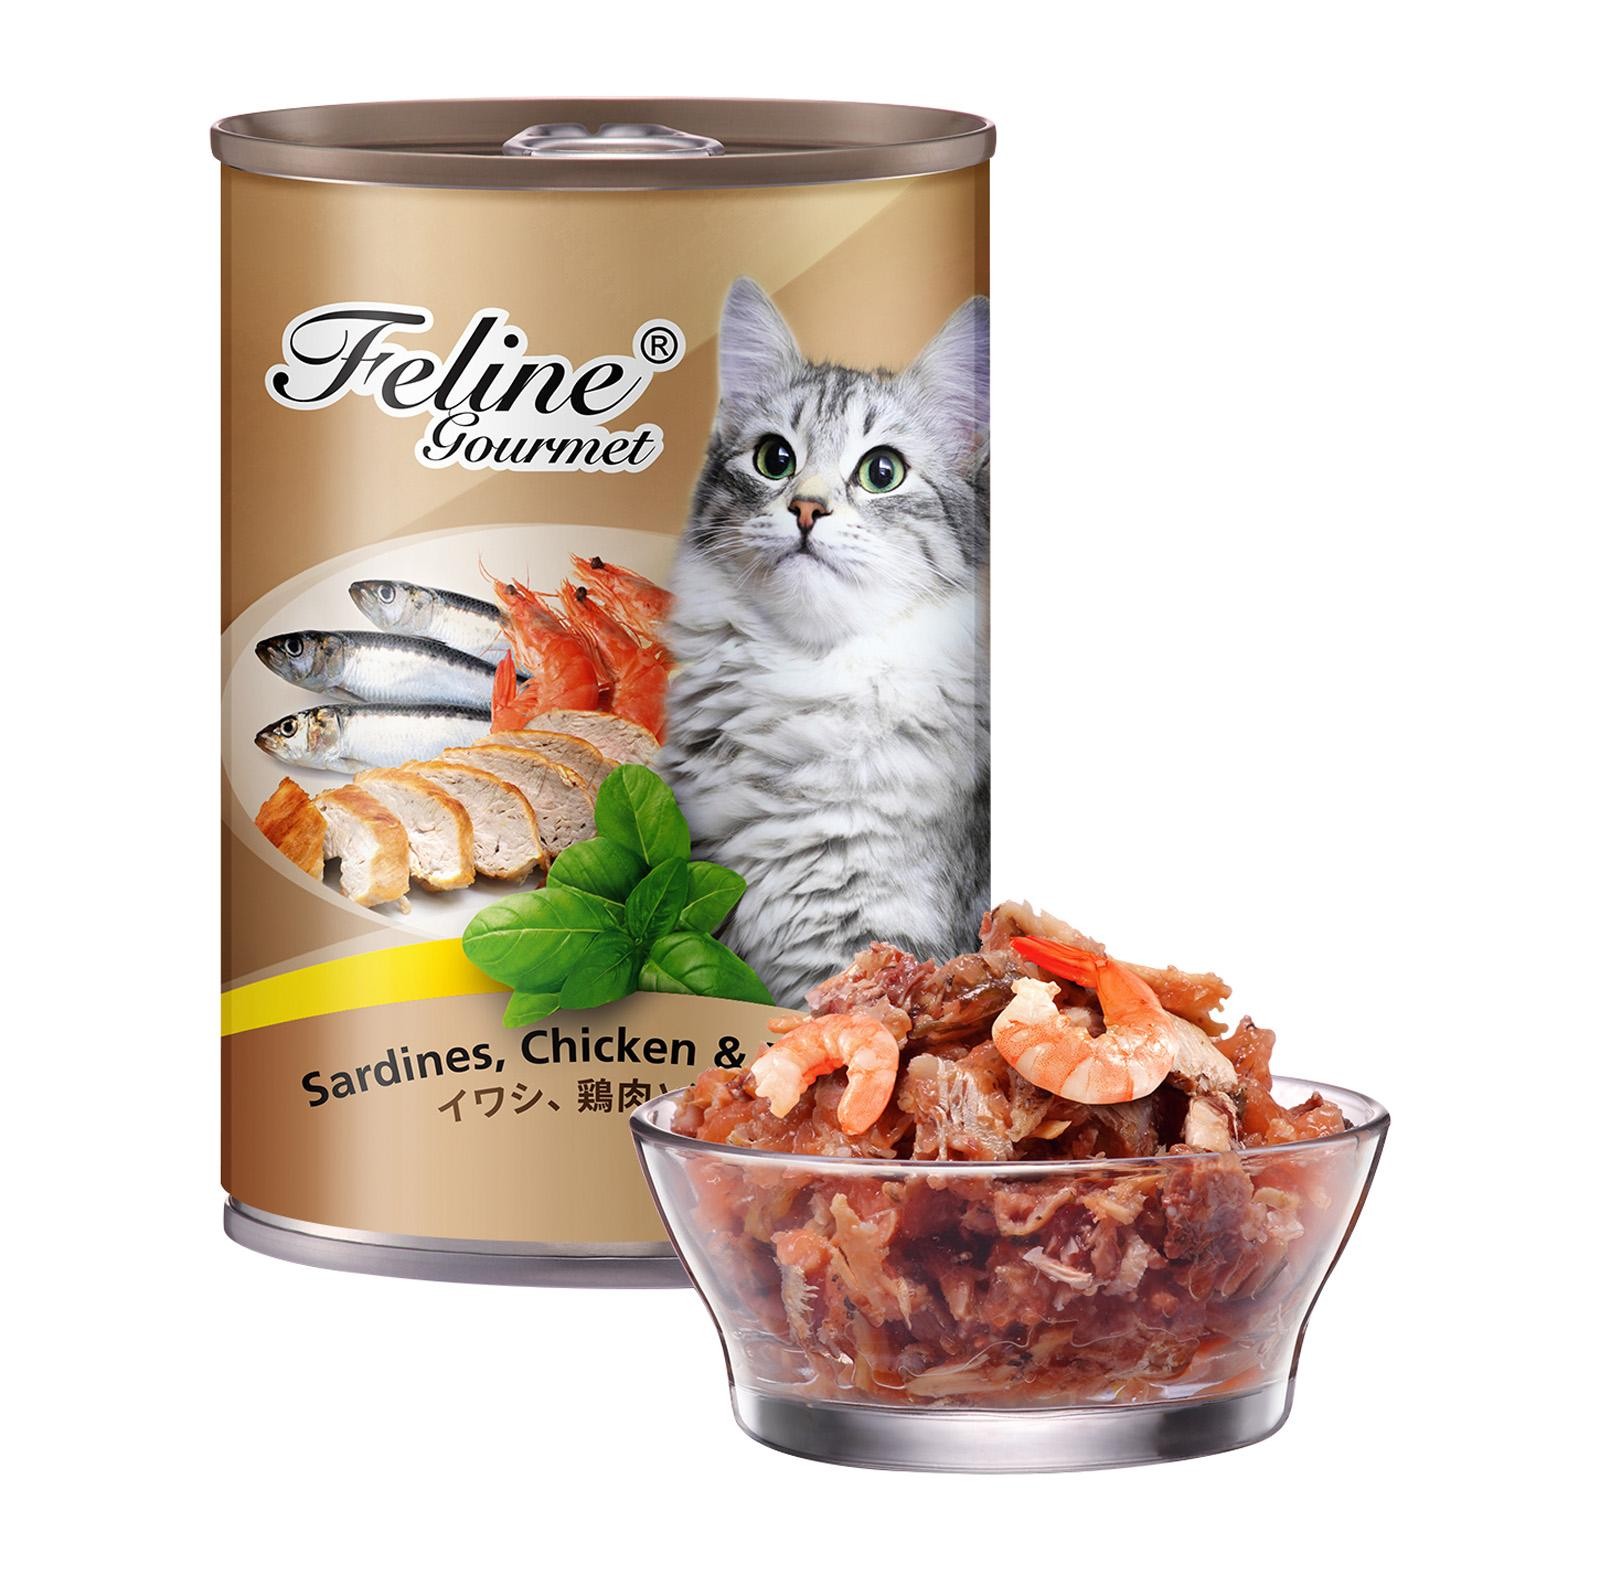 pet plus feline gourmet sardines chicken prawn 400g cat wet food